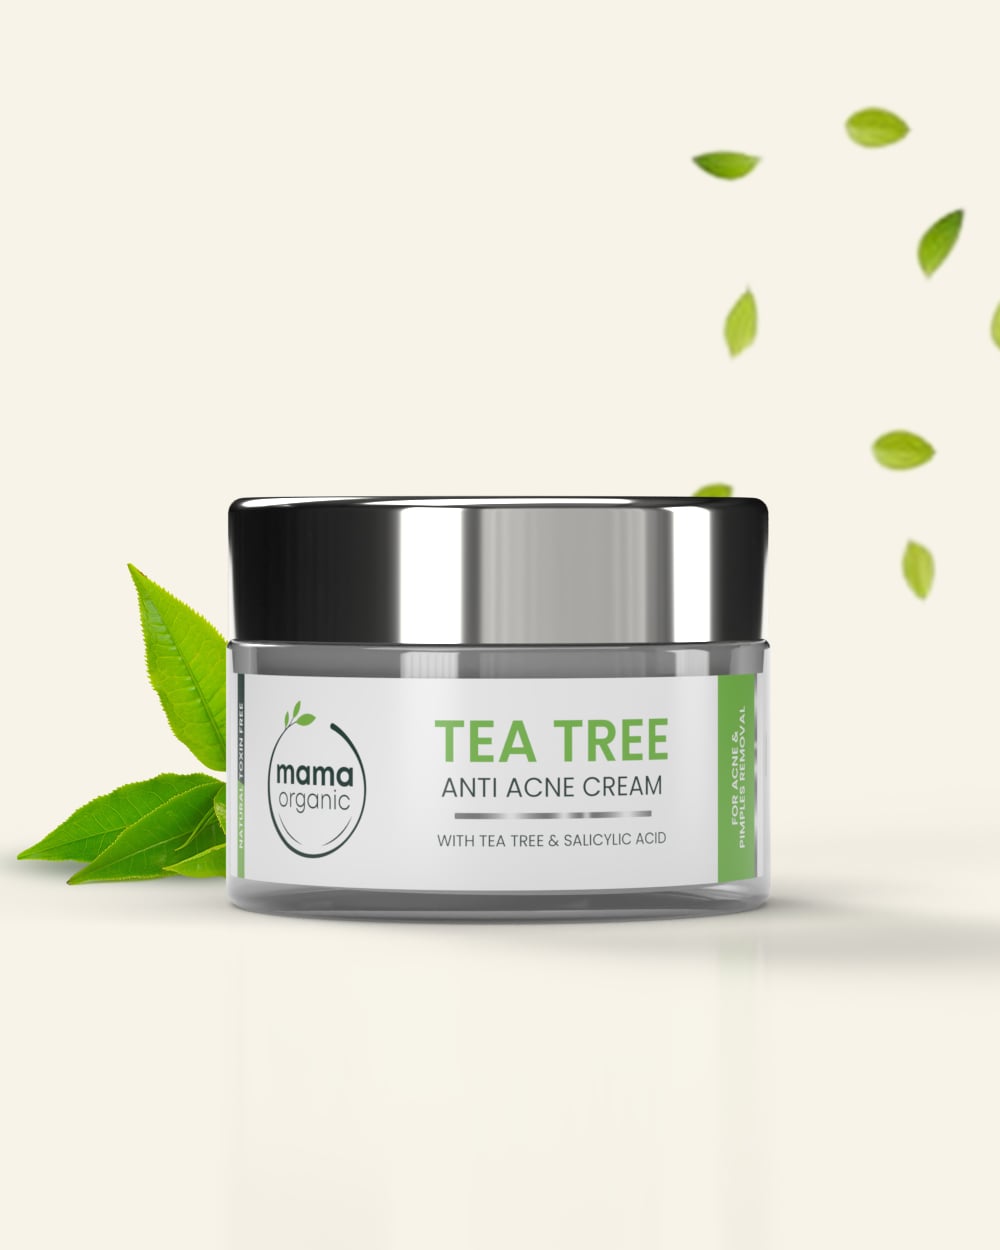 Tea Tree Anti Acne Cream